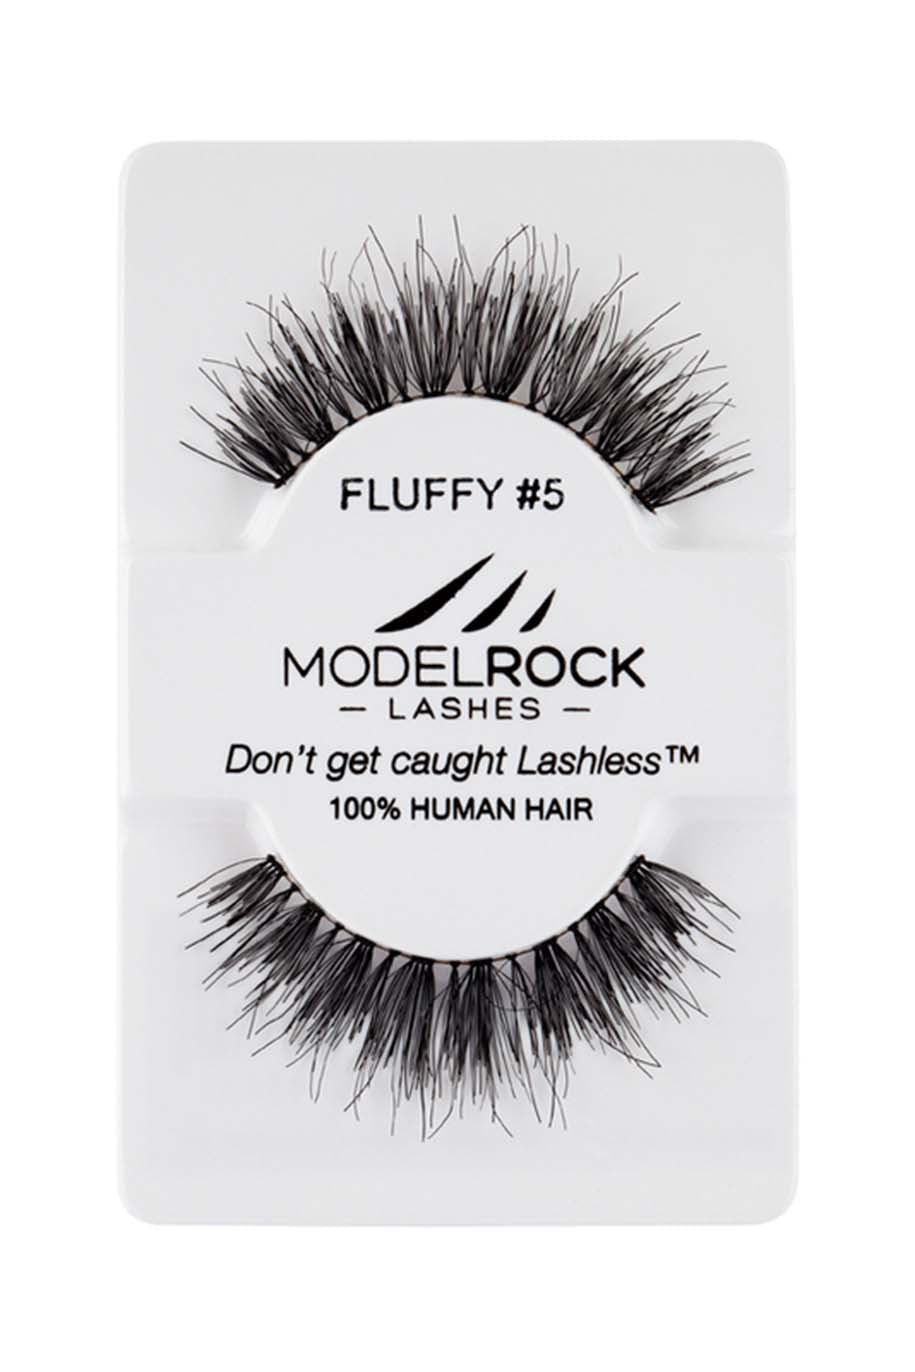 model-rock-lashes-kit-fluffy-#5